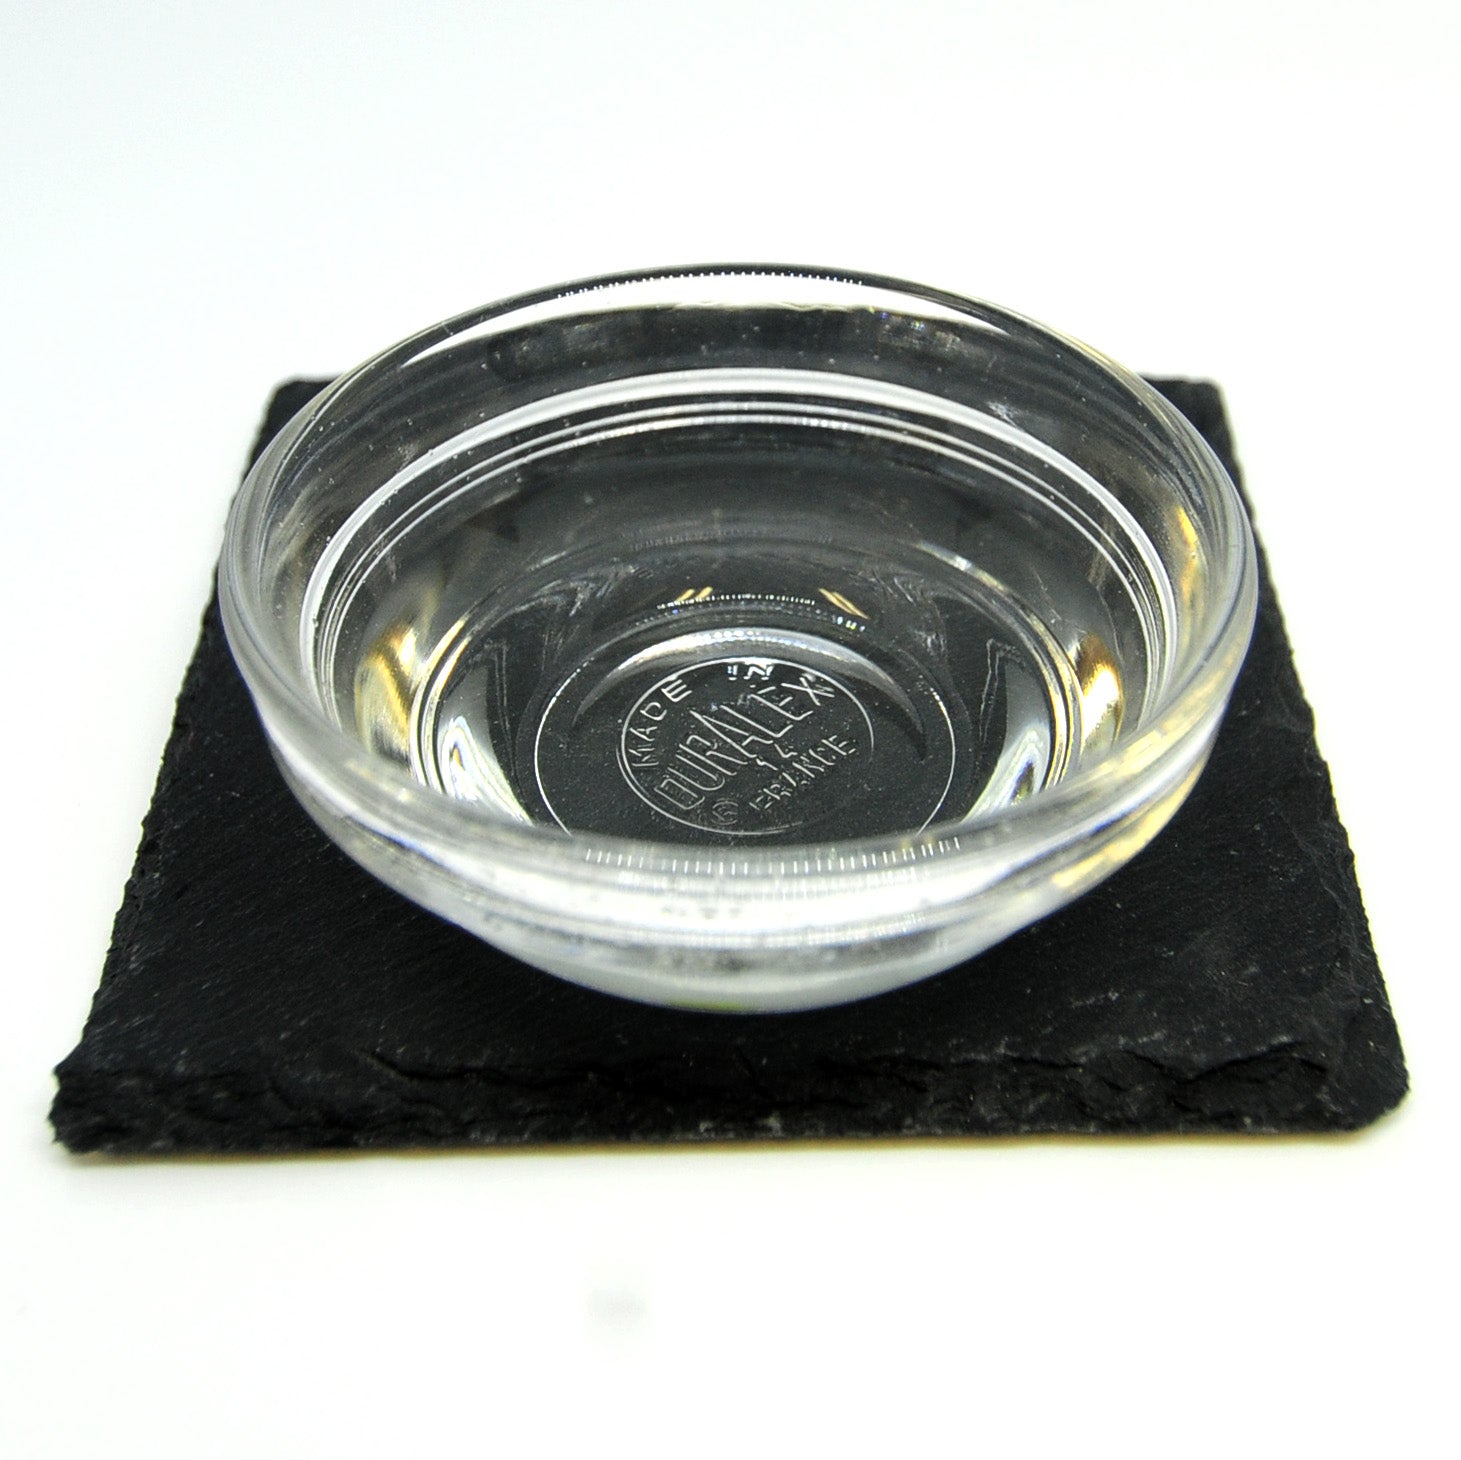 Saliplus Liquid (AKA Liquid Germall Plus) - Isivuno Naturals